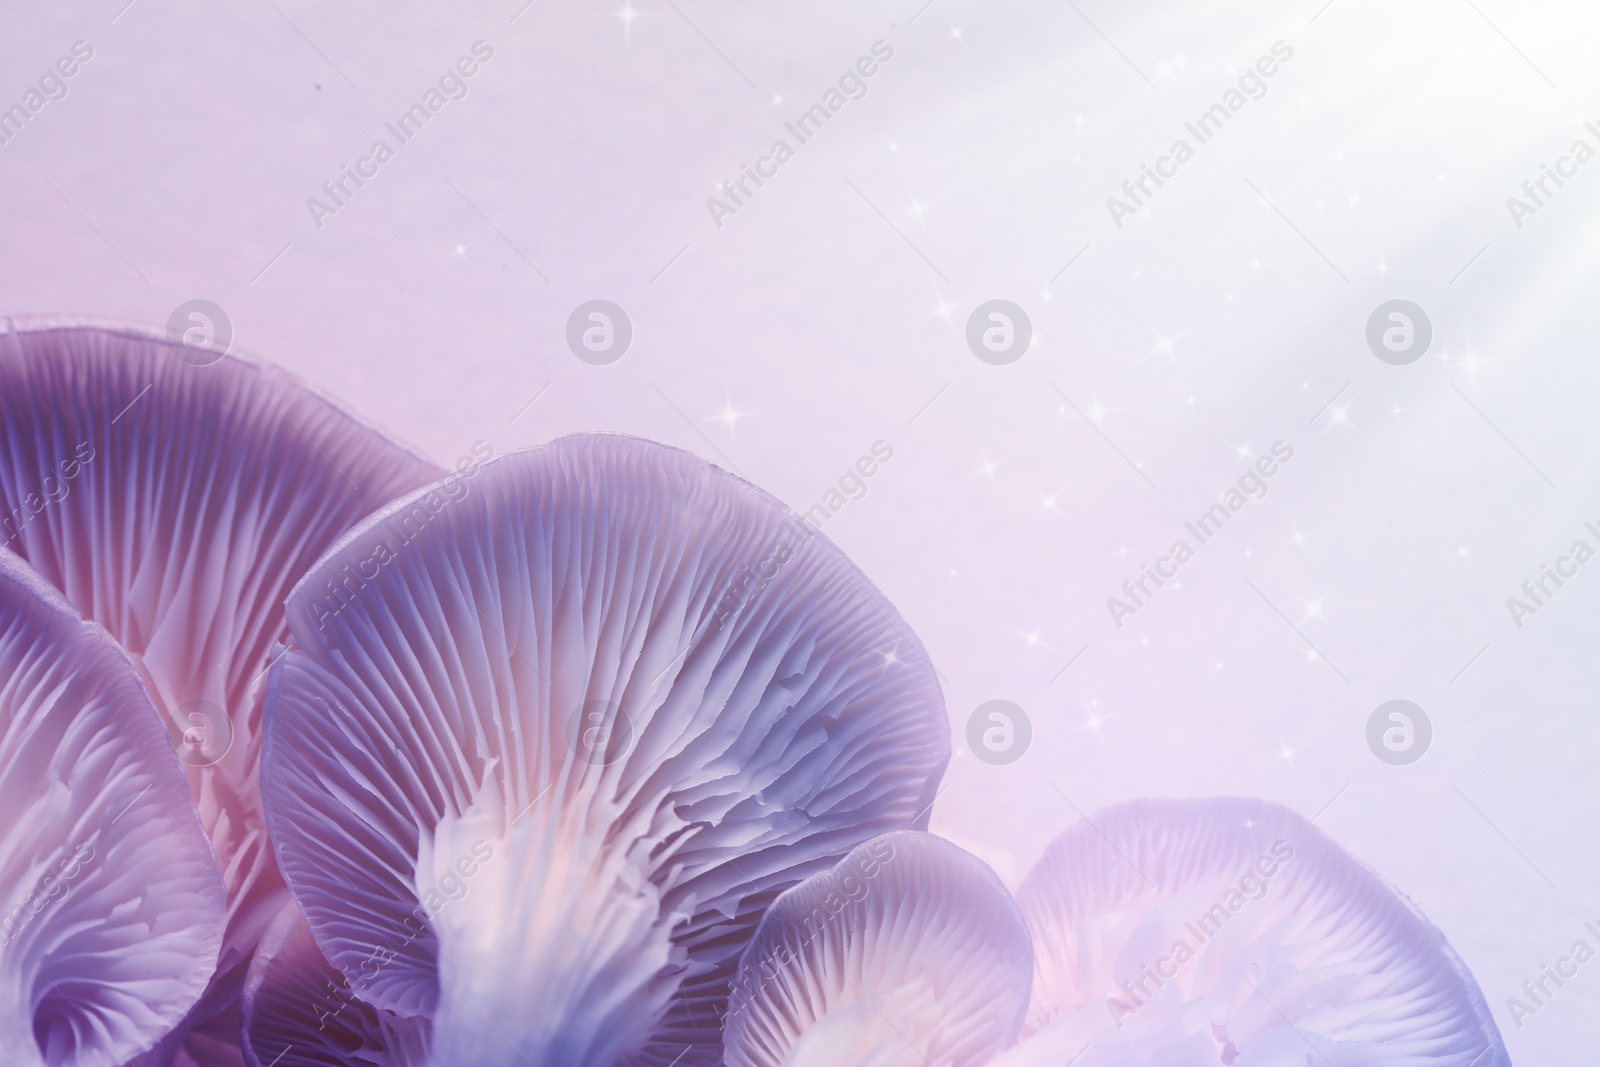 Image of Fresh psilocybin (magic) mushrooms with stars on light background, closeup. Color toned